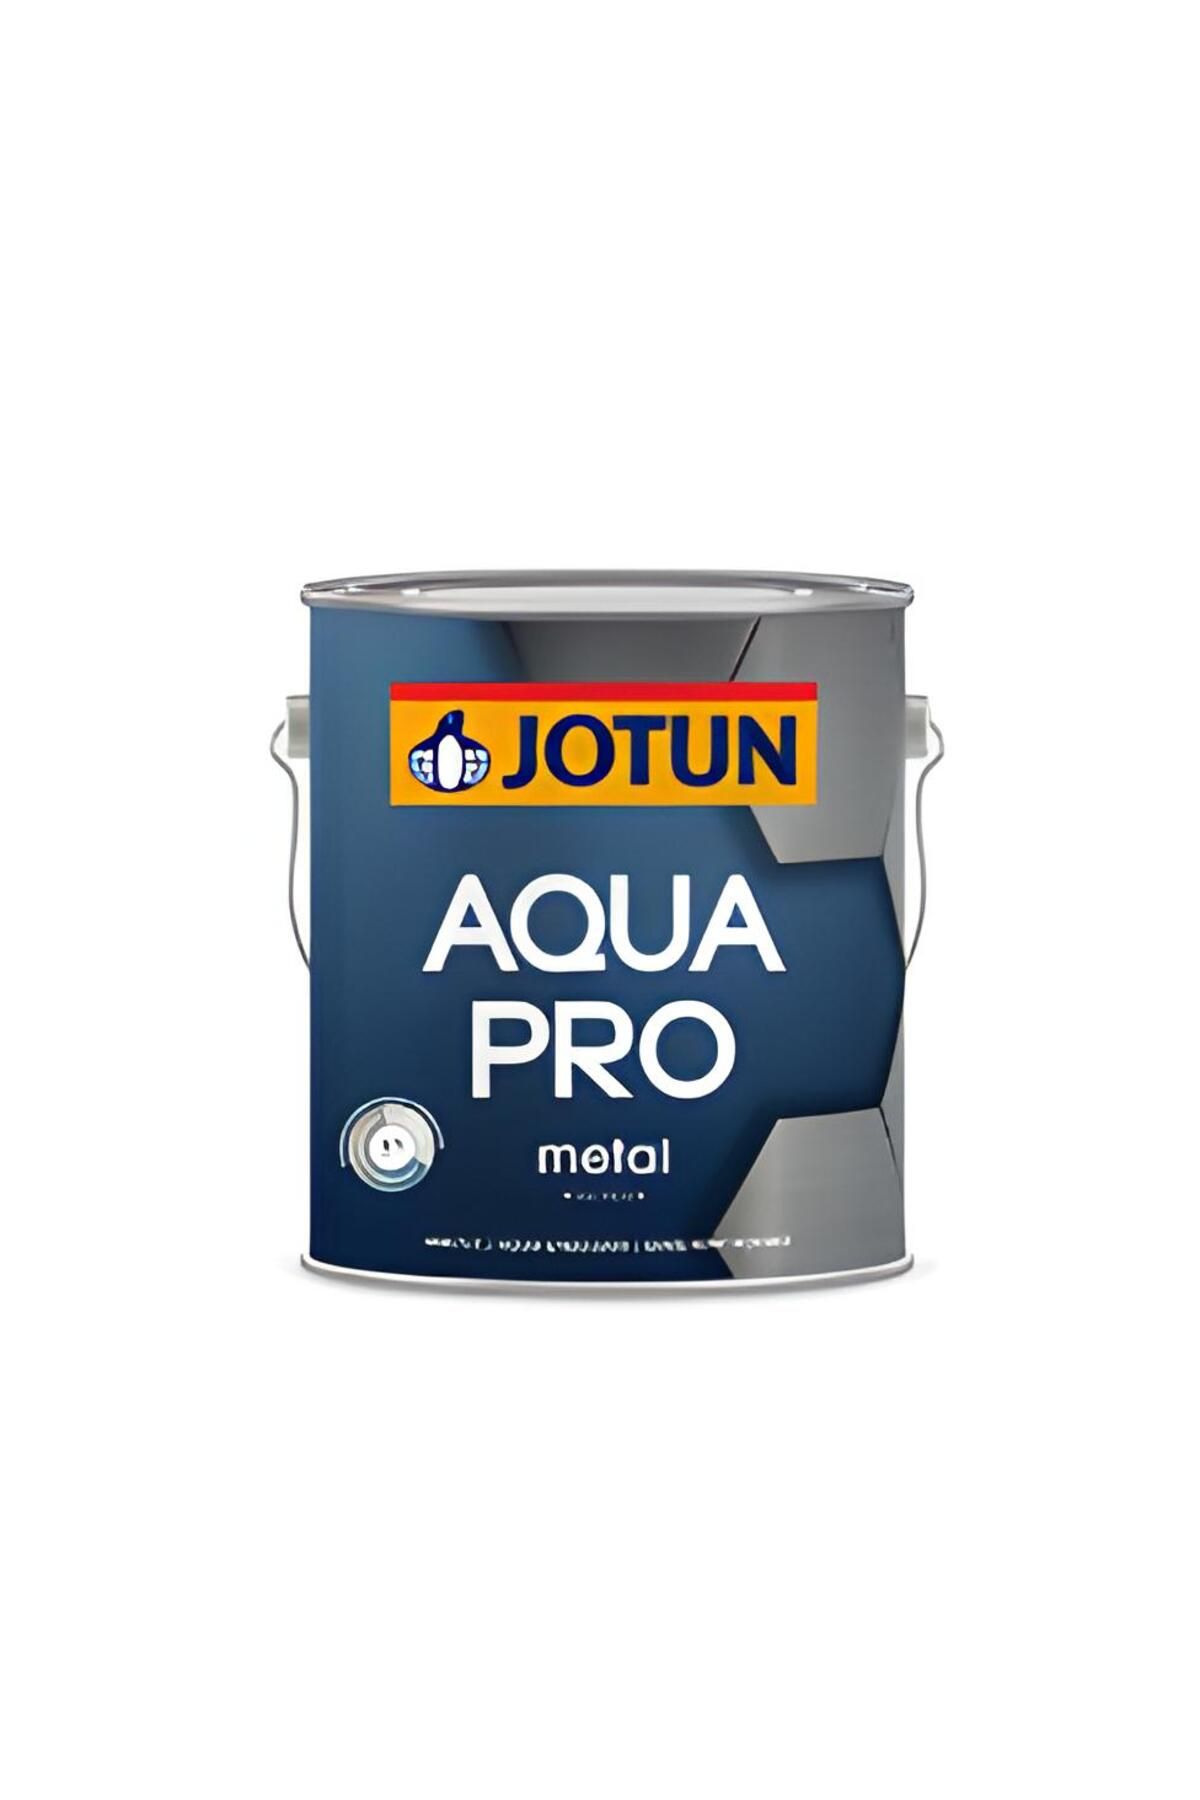 Jotun Aqua Pro Metal Boyası 0.9 Lt.